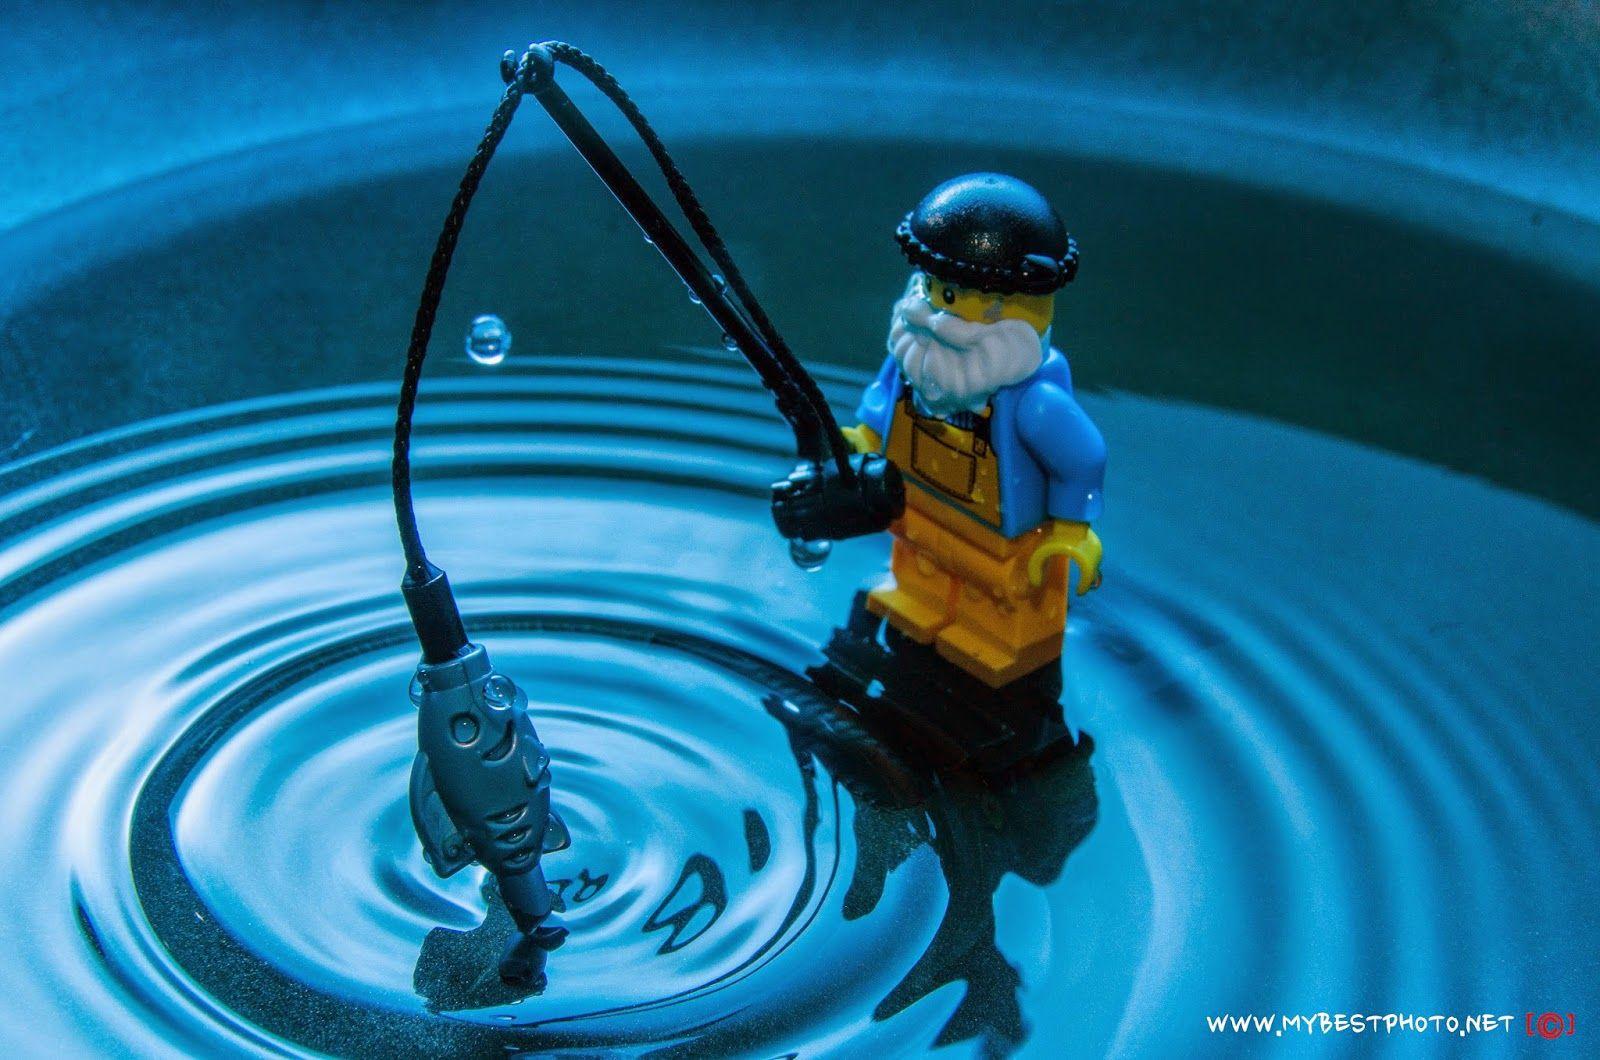 Lego Minifigures in the Wild: Lego Minifigure Series 3 Fisherman